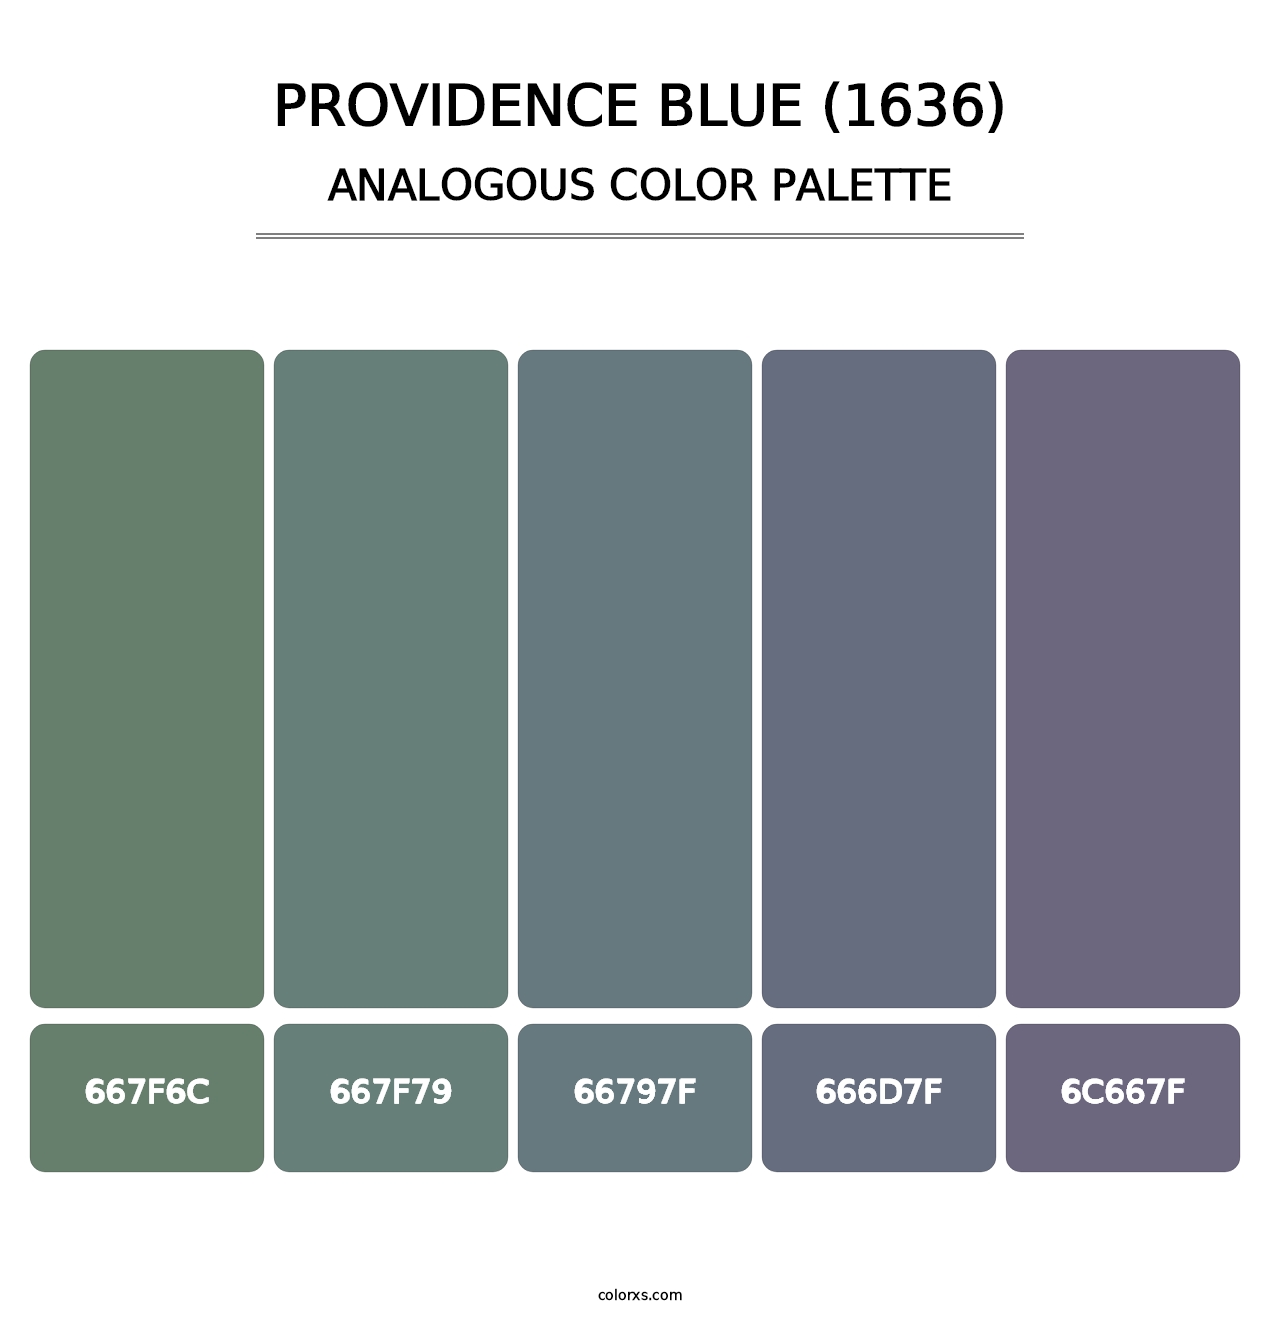 Providence Blue (1636) - Analogous Color Palette